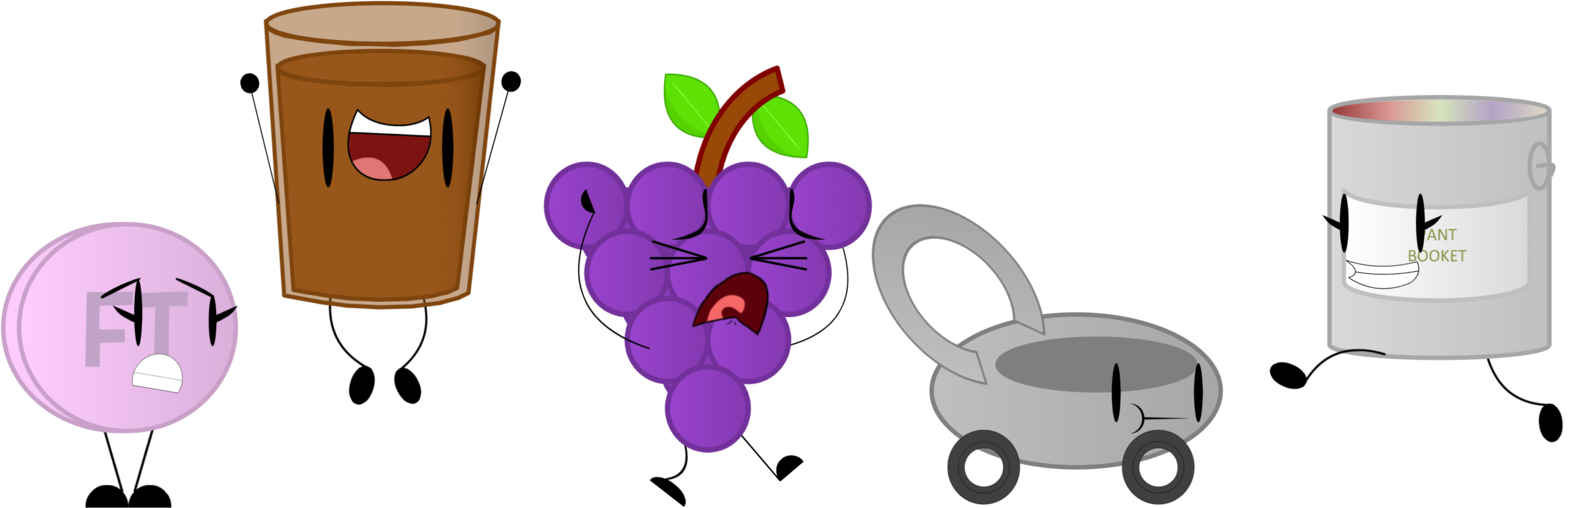 grapes clipart purple object